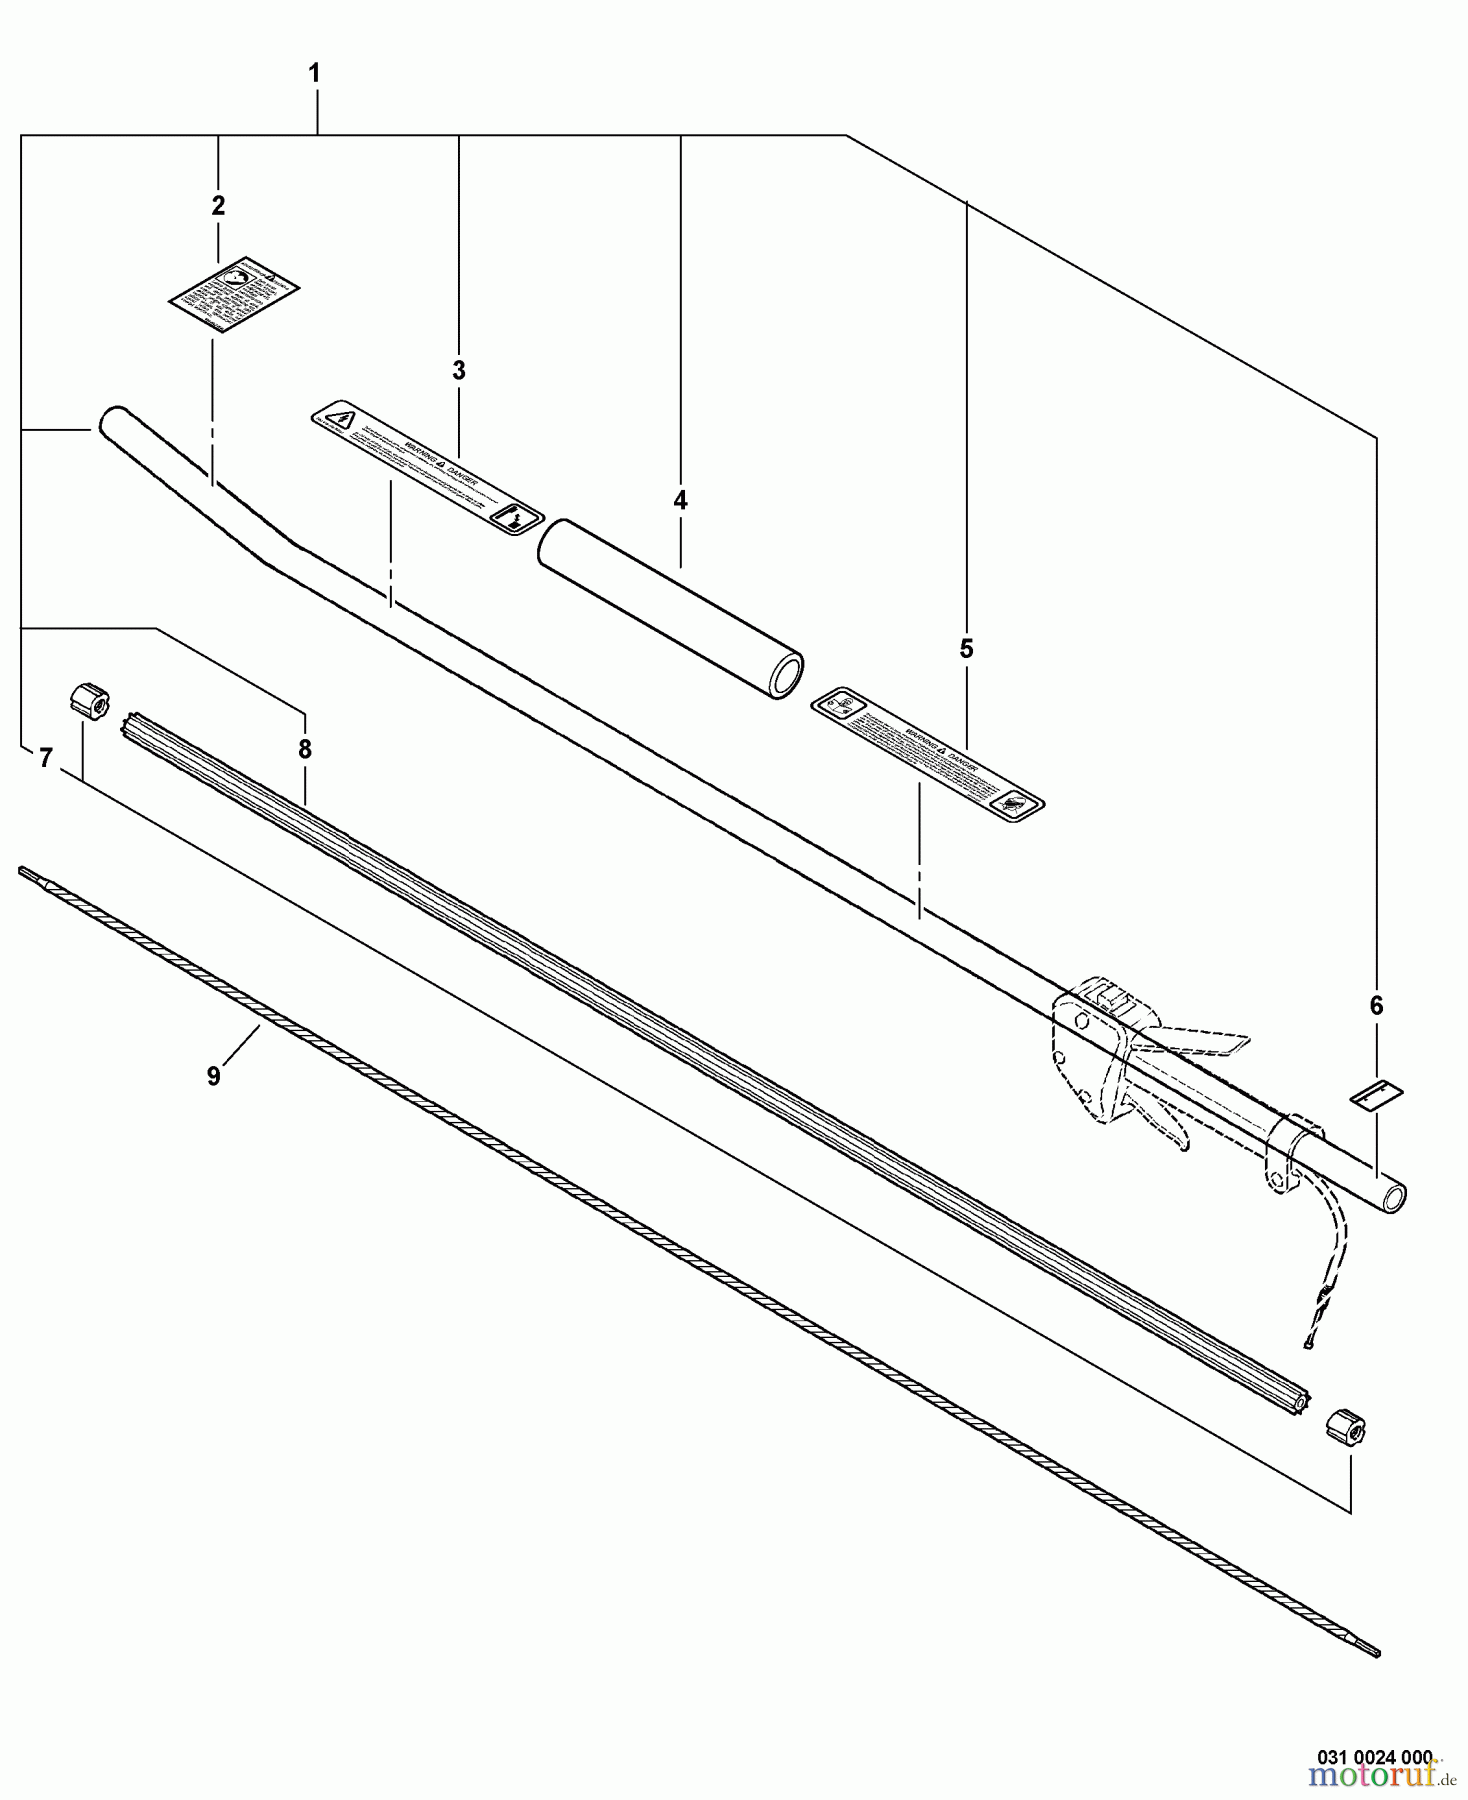  Echo Heckenscheren SHC-260 - Echo Shaft Hedge Trimmer, S/N: 05001001 - 05999999 Main Pipe Asy, Flexible Driveshaft